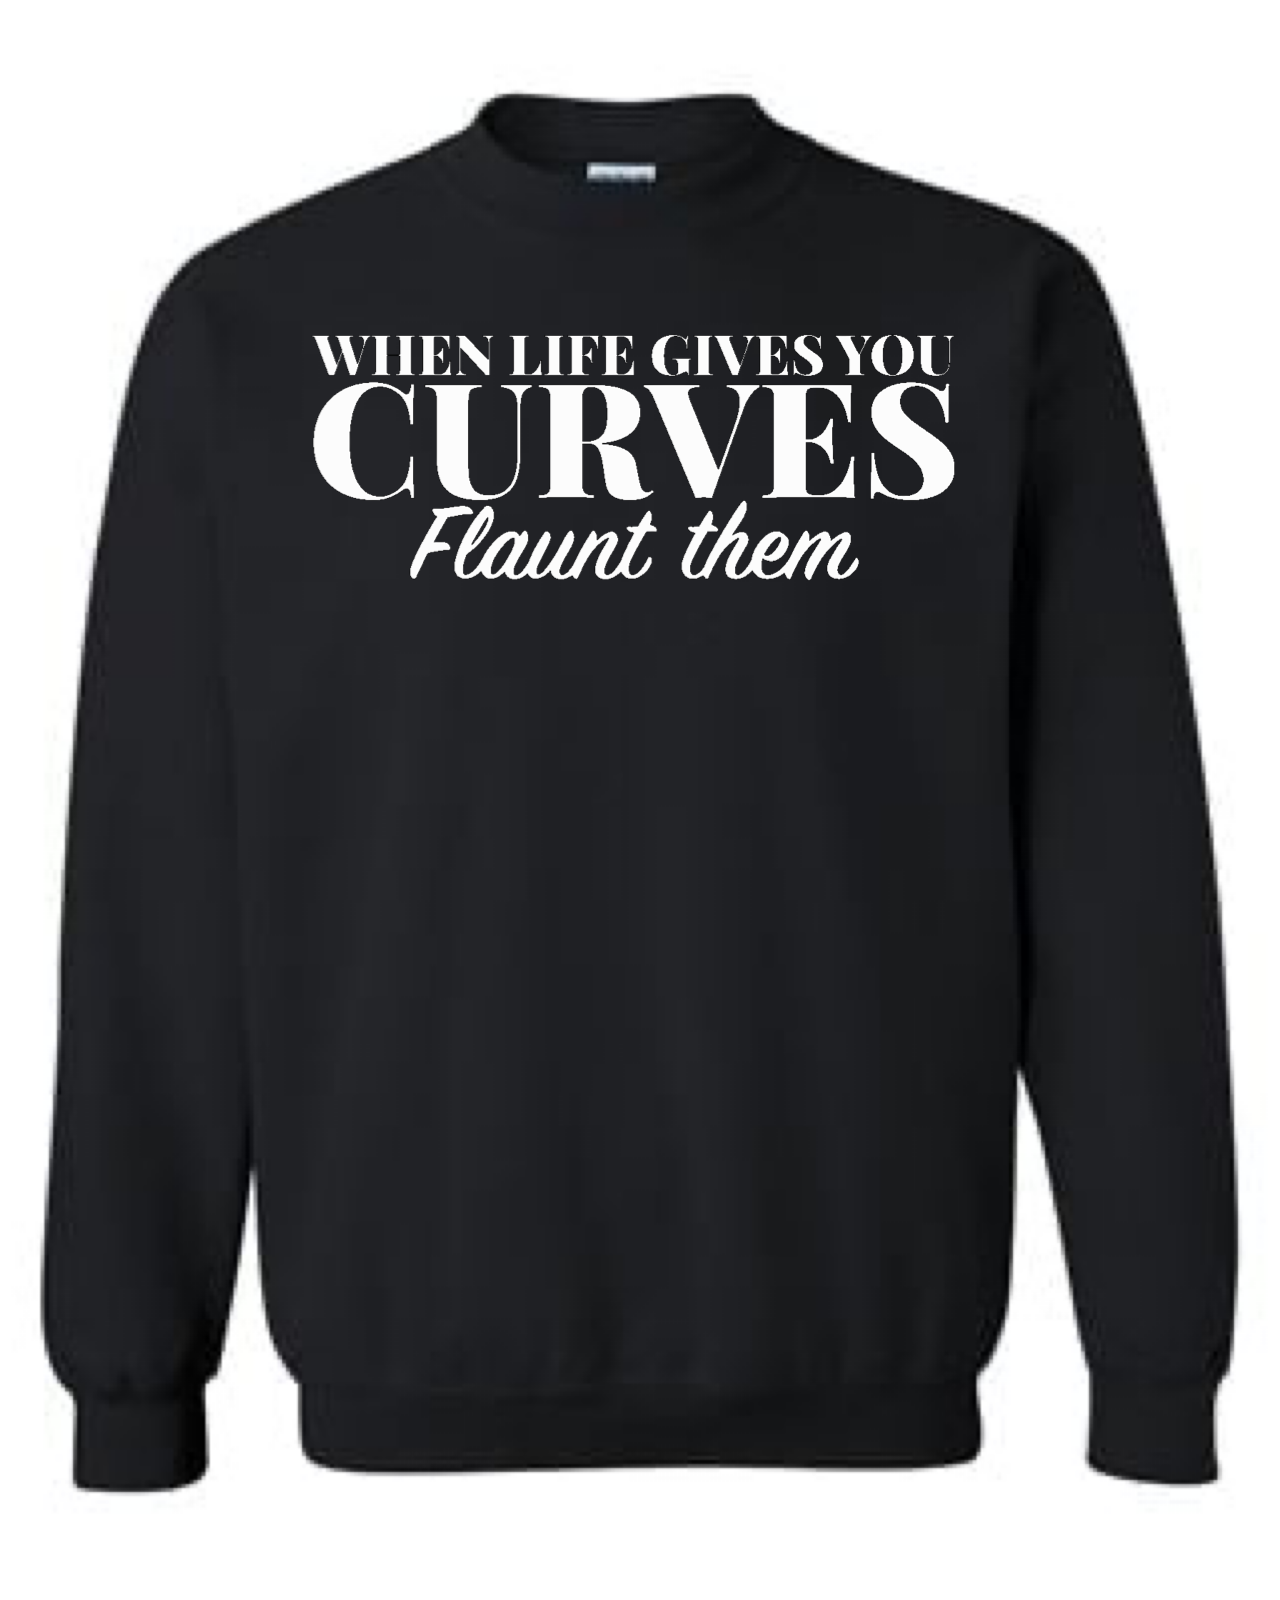 Flaunt Your Curves Crewneck Sweatshirt